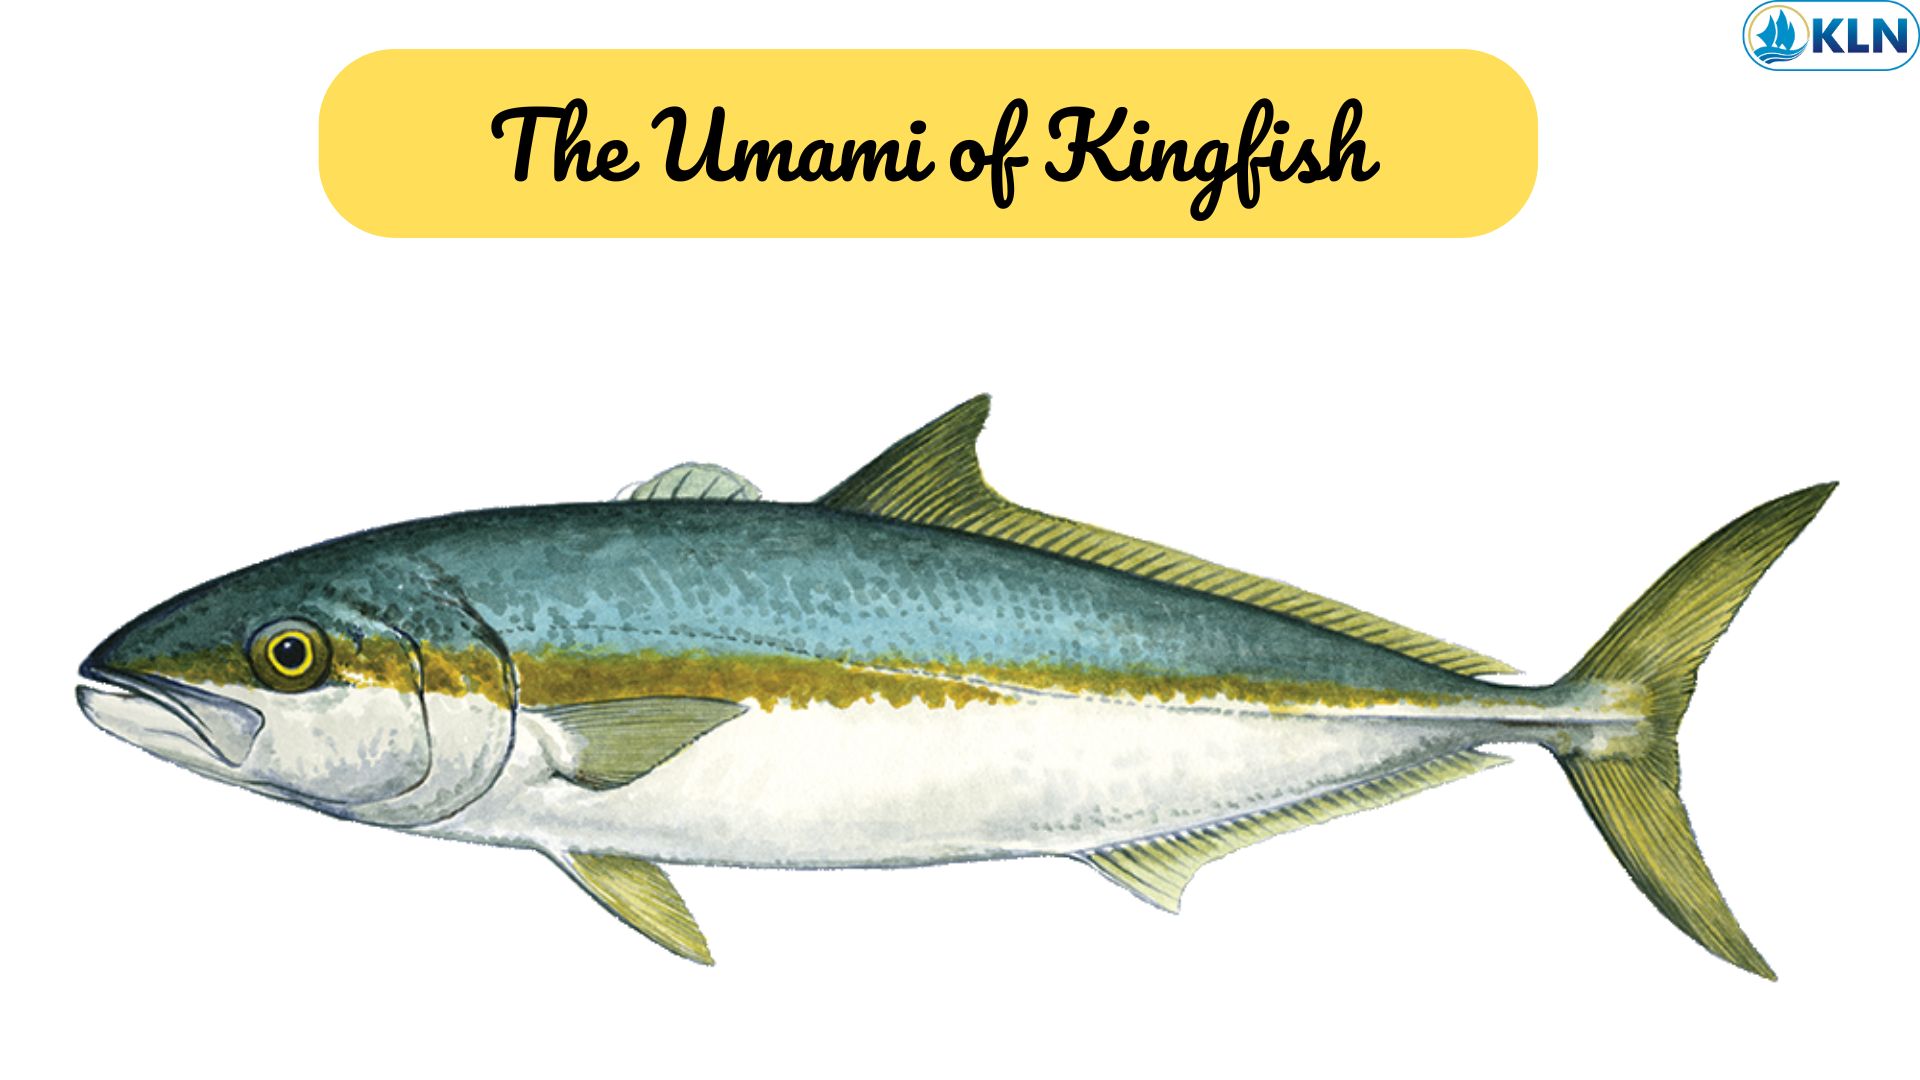 The Umami of Kingfish